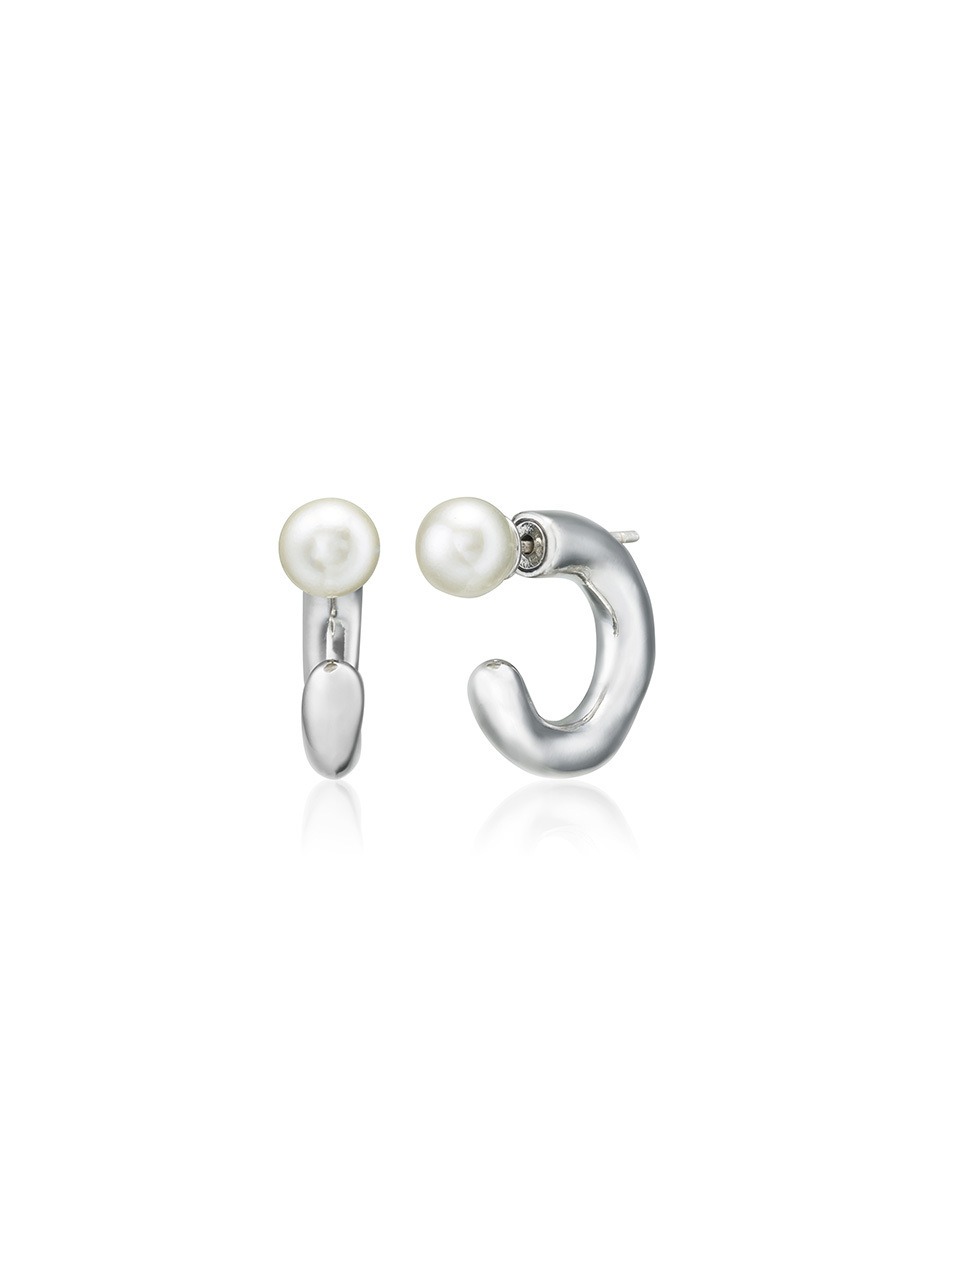 Melting Pearl Ring Earrings Silver